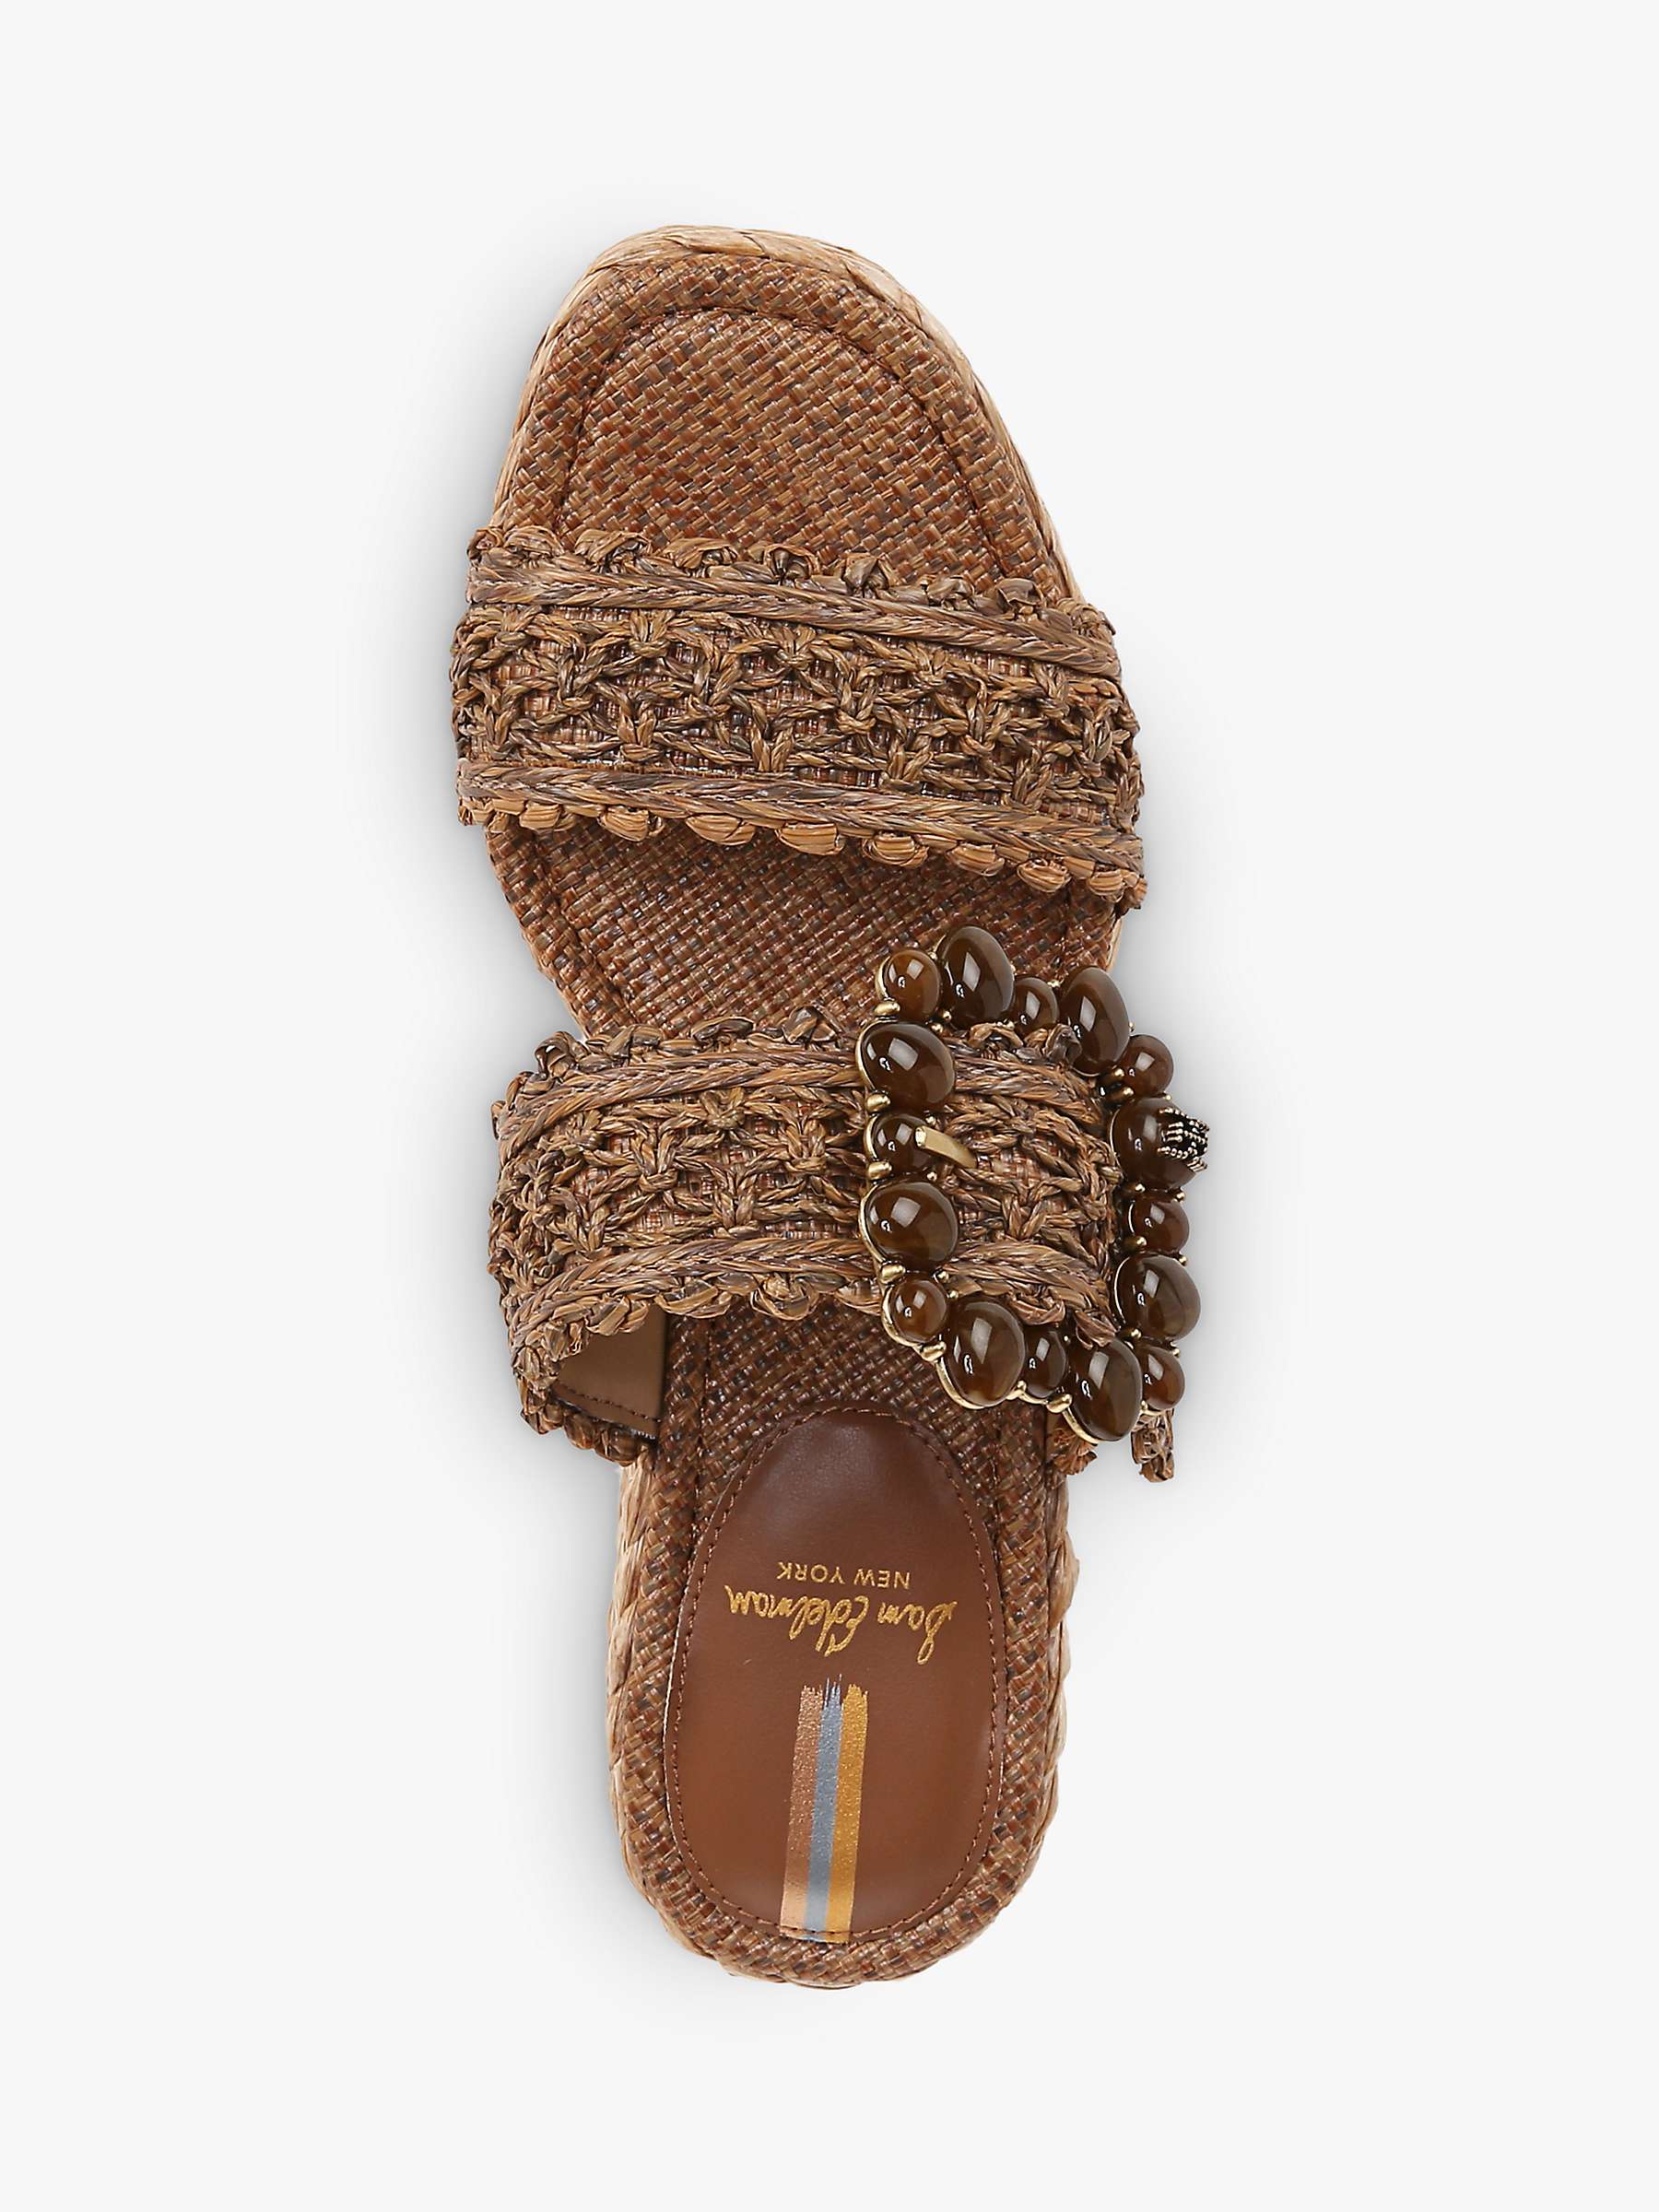 Buy Sam Edelman Cadance Wedge Heel Sandals Online at johnlewis.com